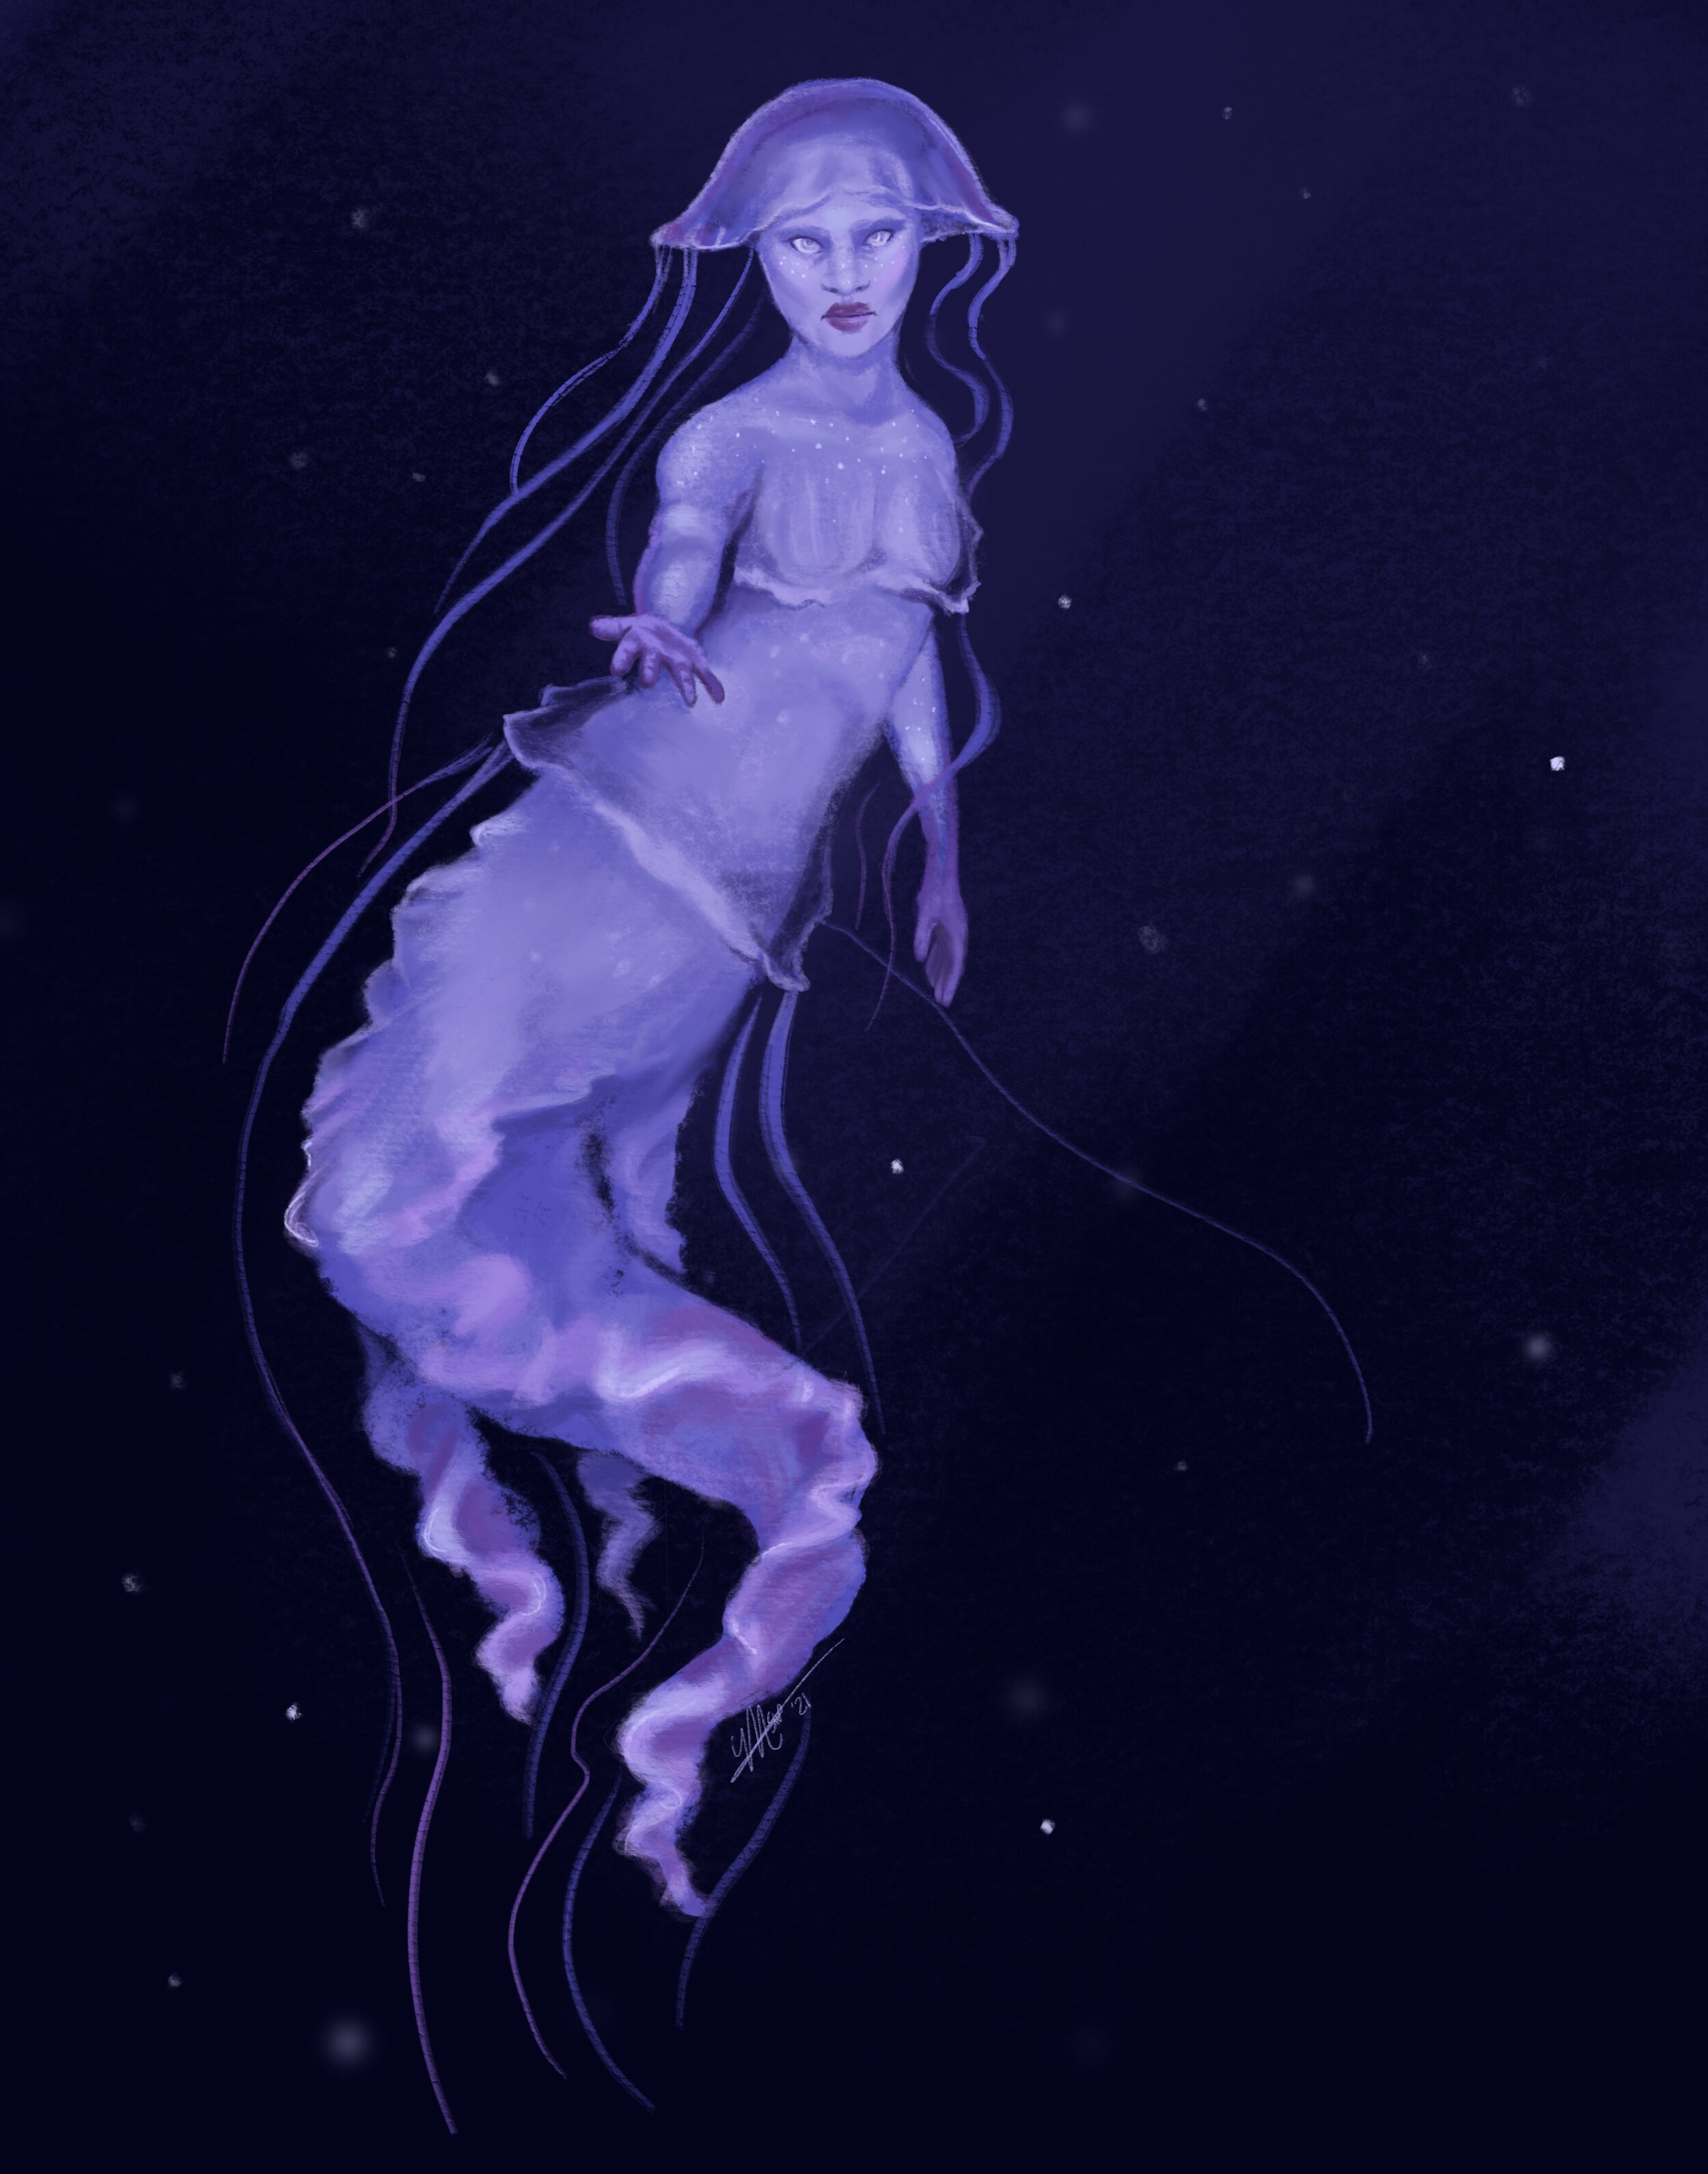 Jellyfish Woman